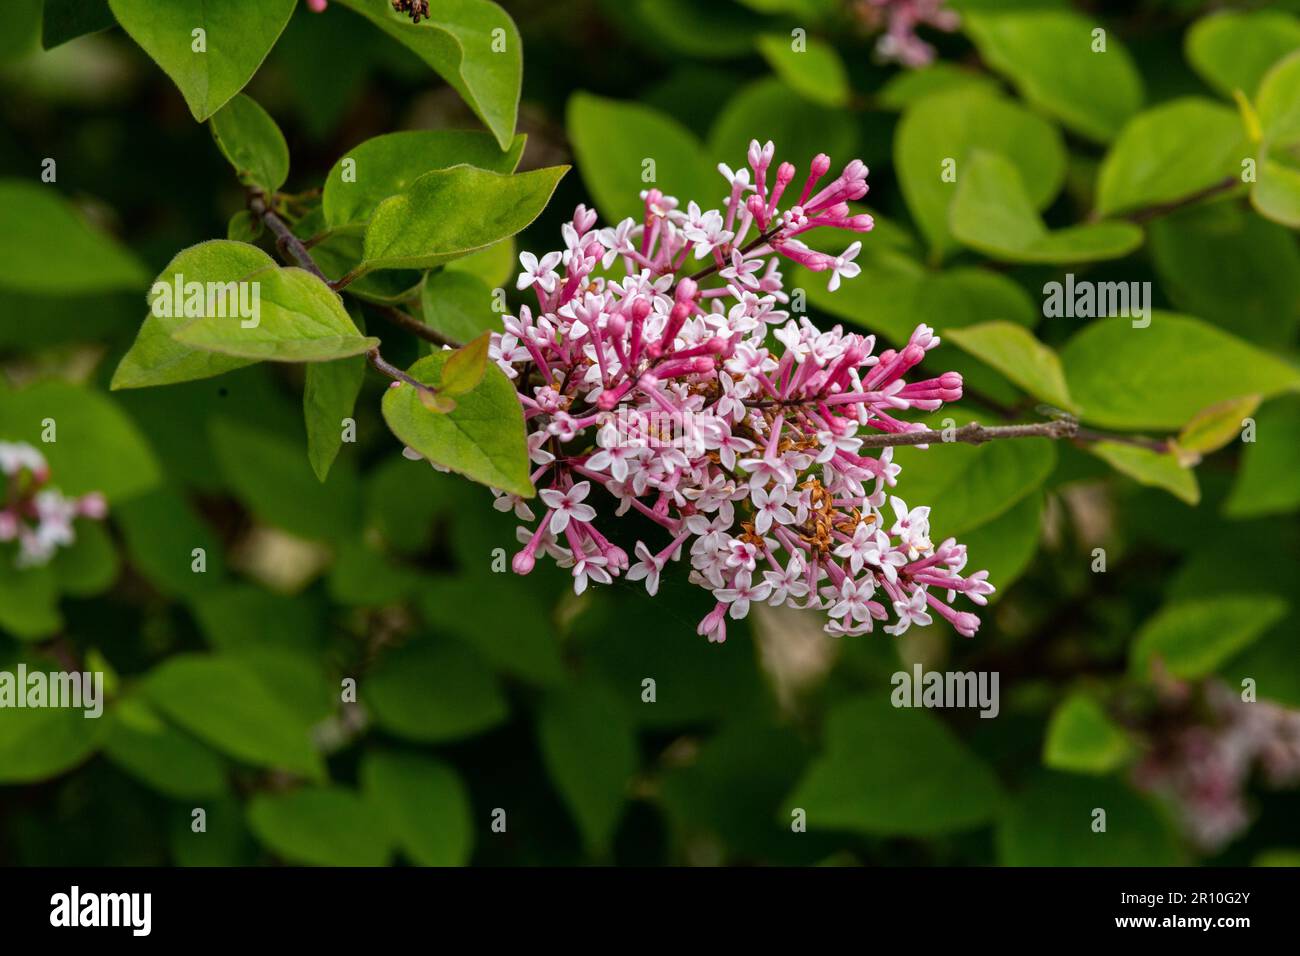 Syringa pubescens microphylla 'Superba'. Lilac Superba. Littleleaf lilac. Stock Photo